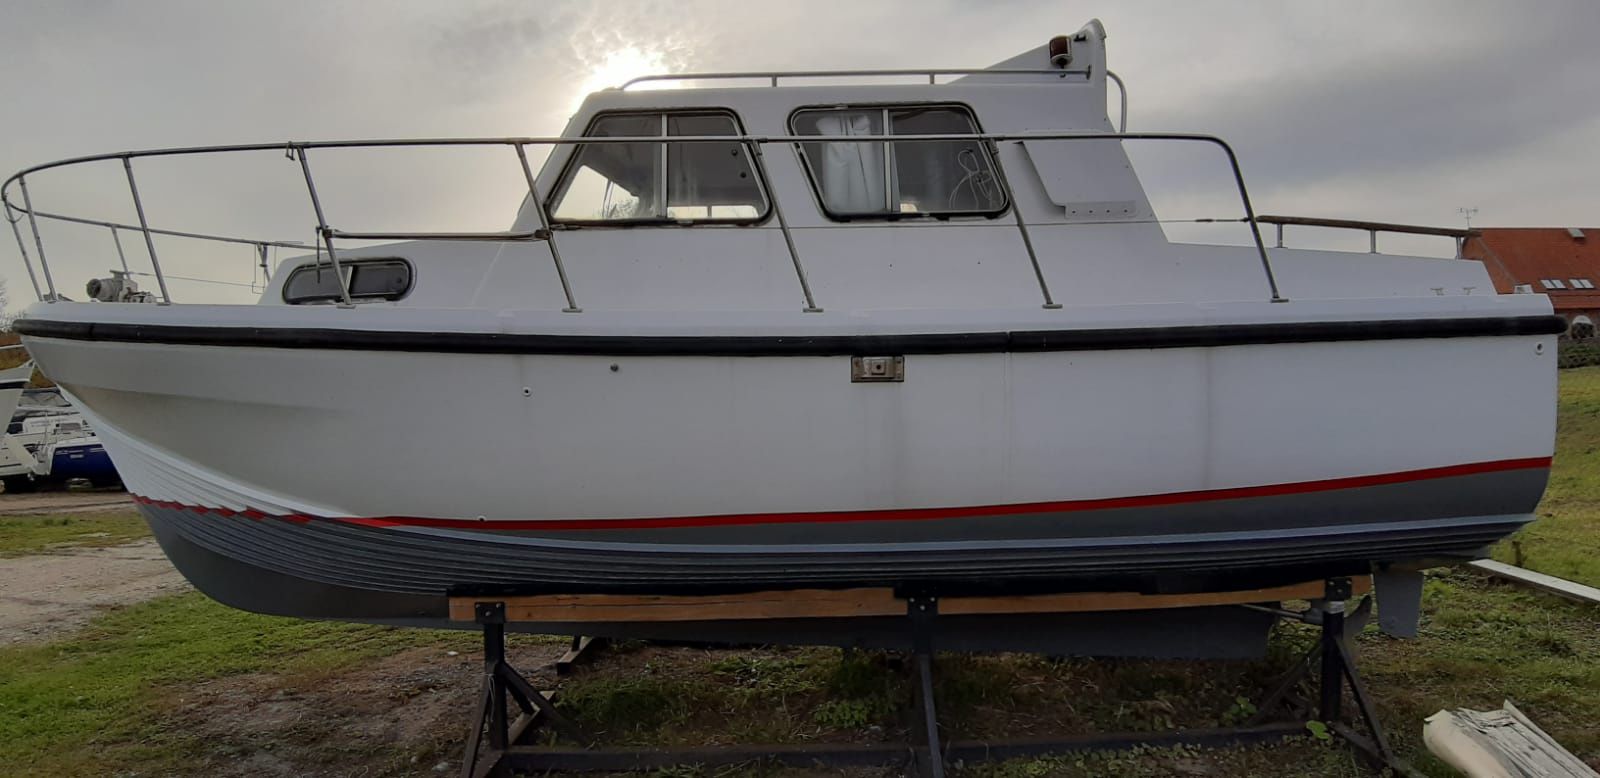 Jacht motorowy hauseboat